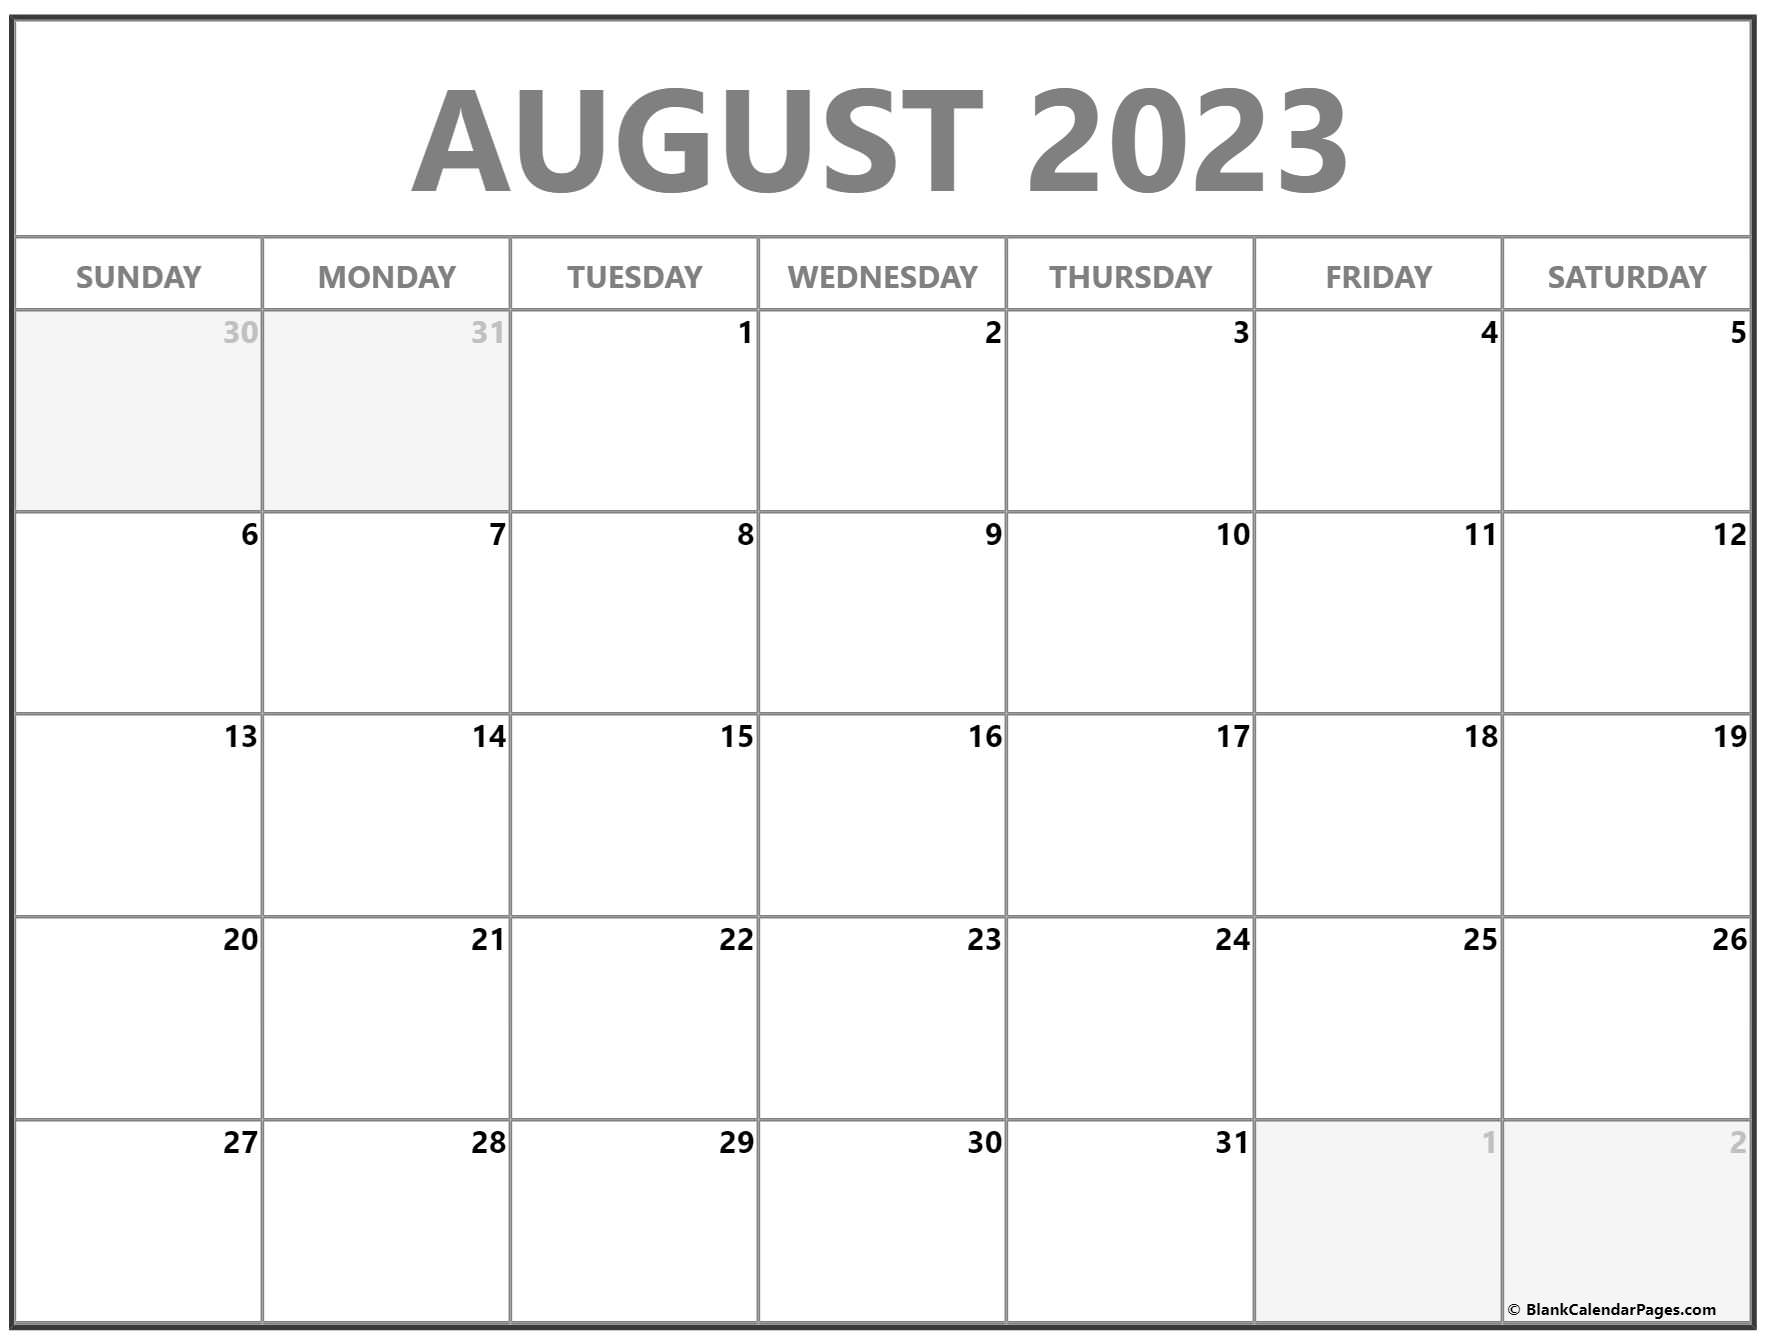 august-2023-calendar-pages-riset